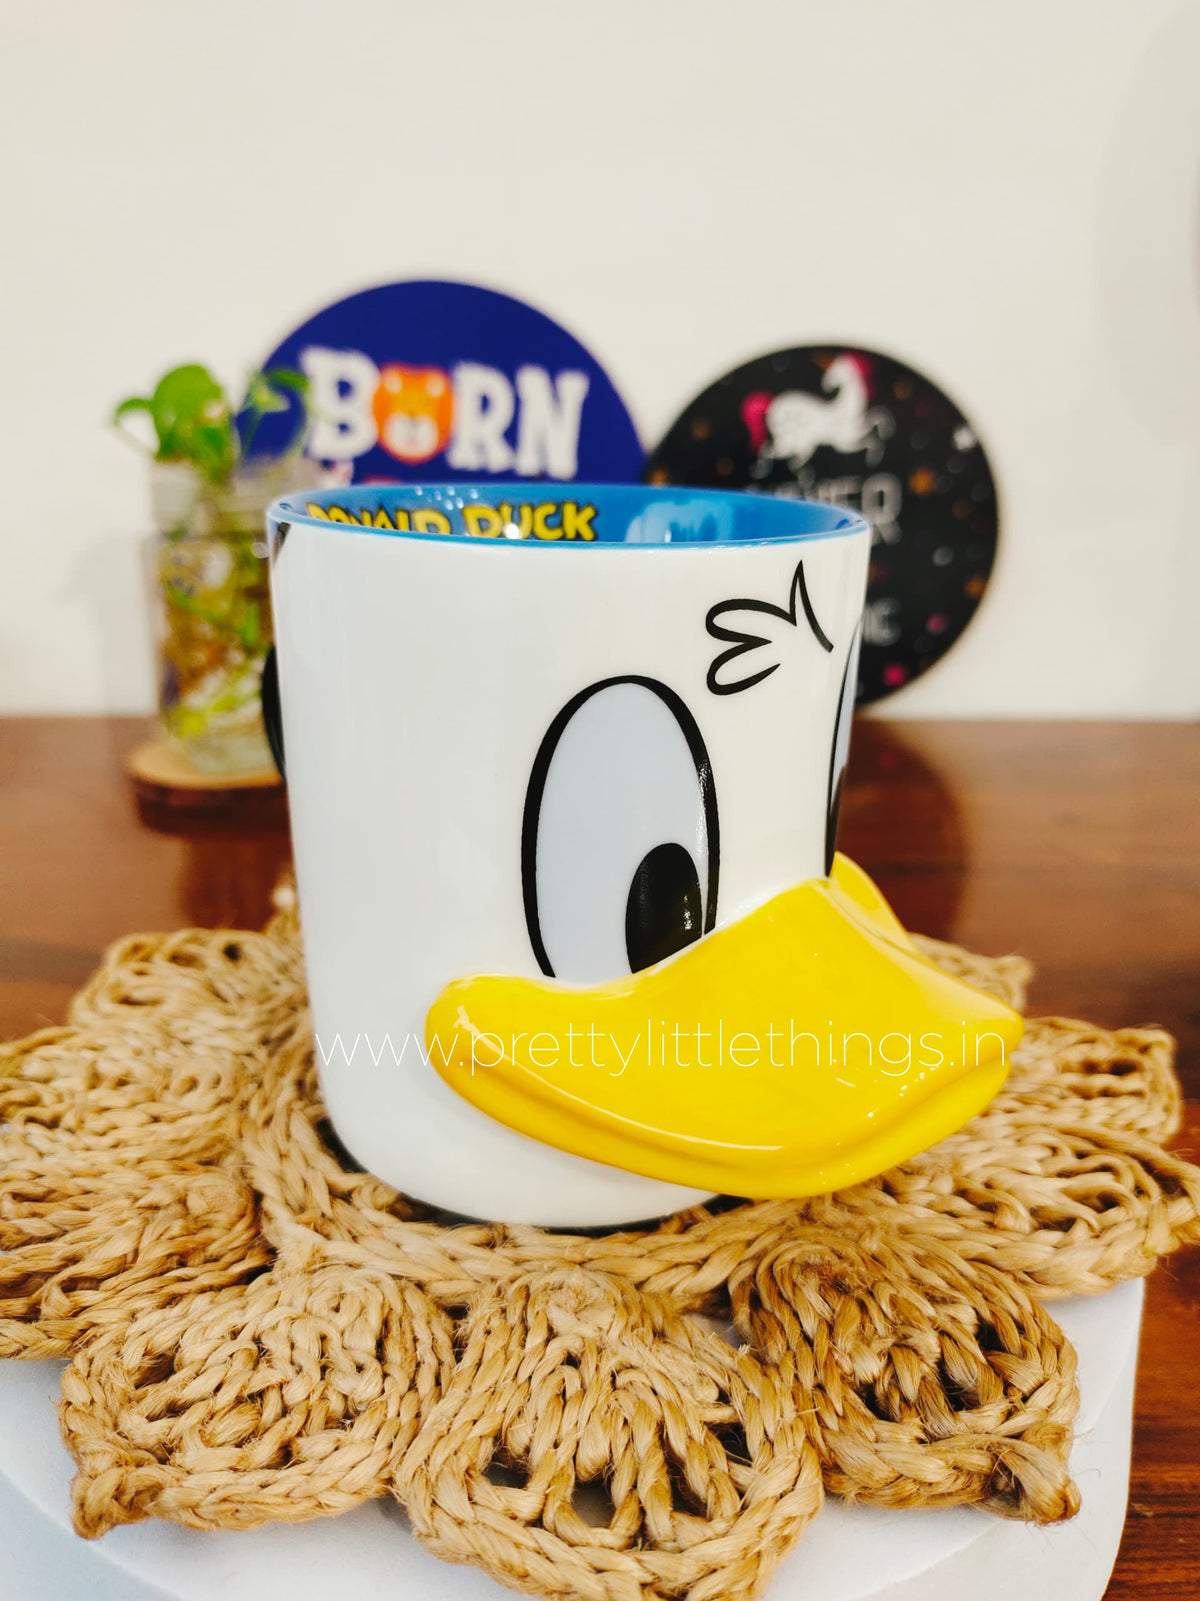 Donald & Daisy [ Duck ] Mug (Ceramic)